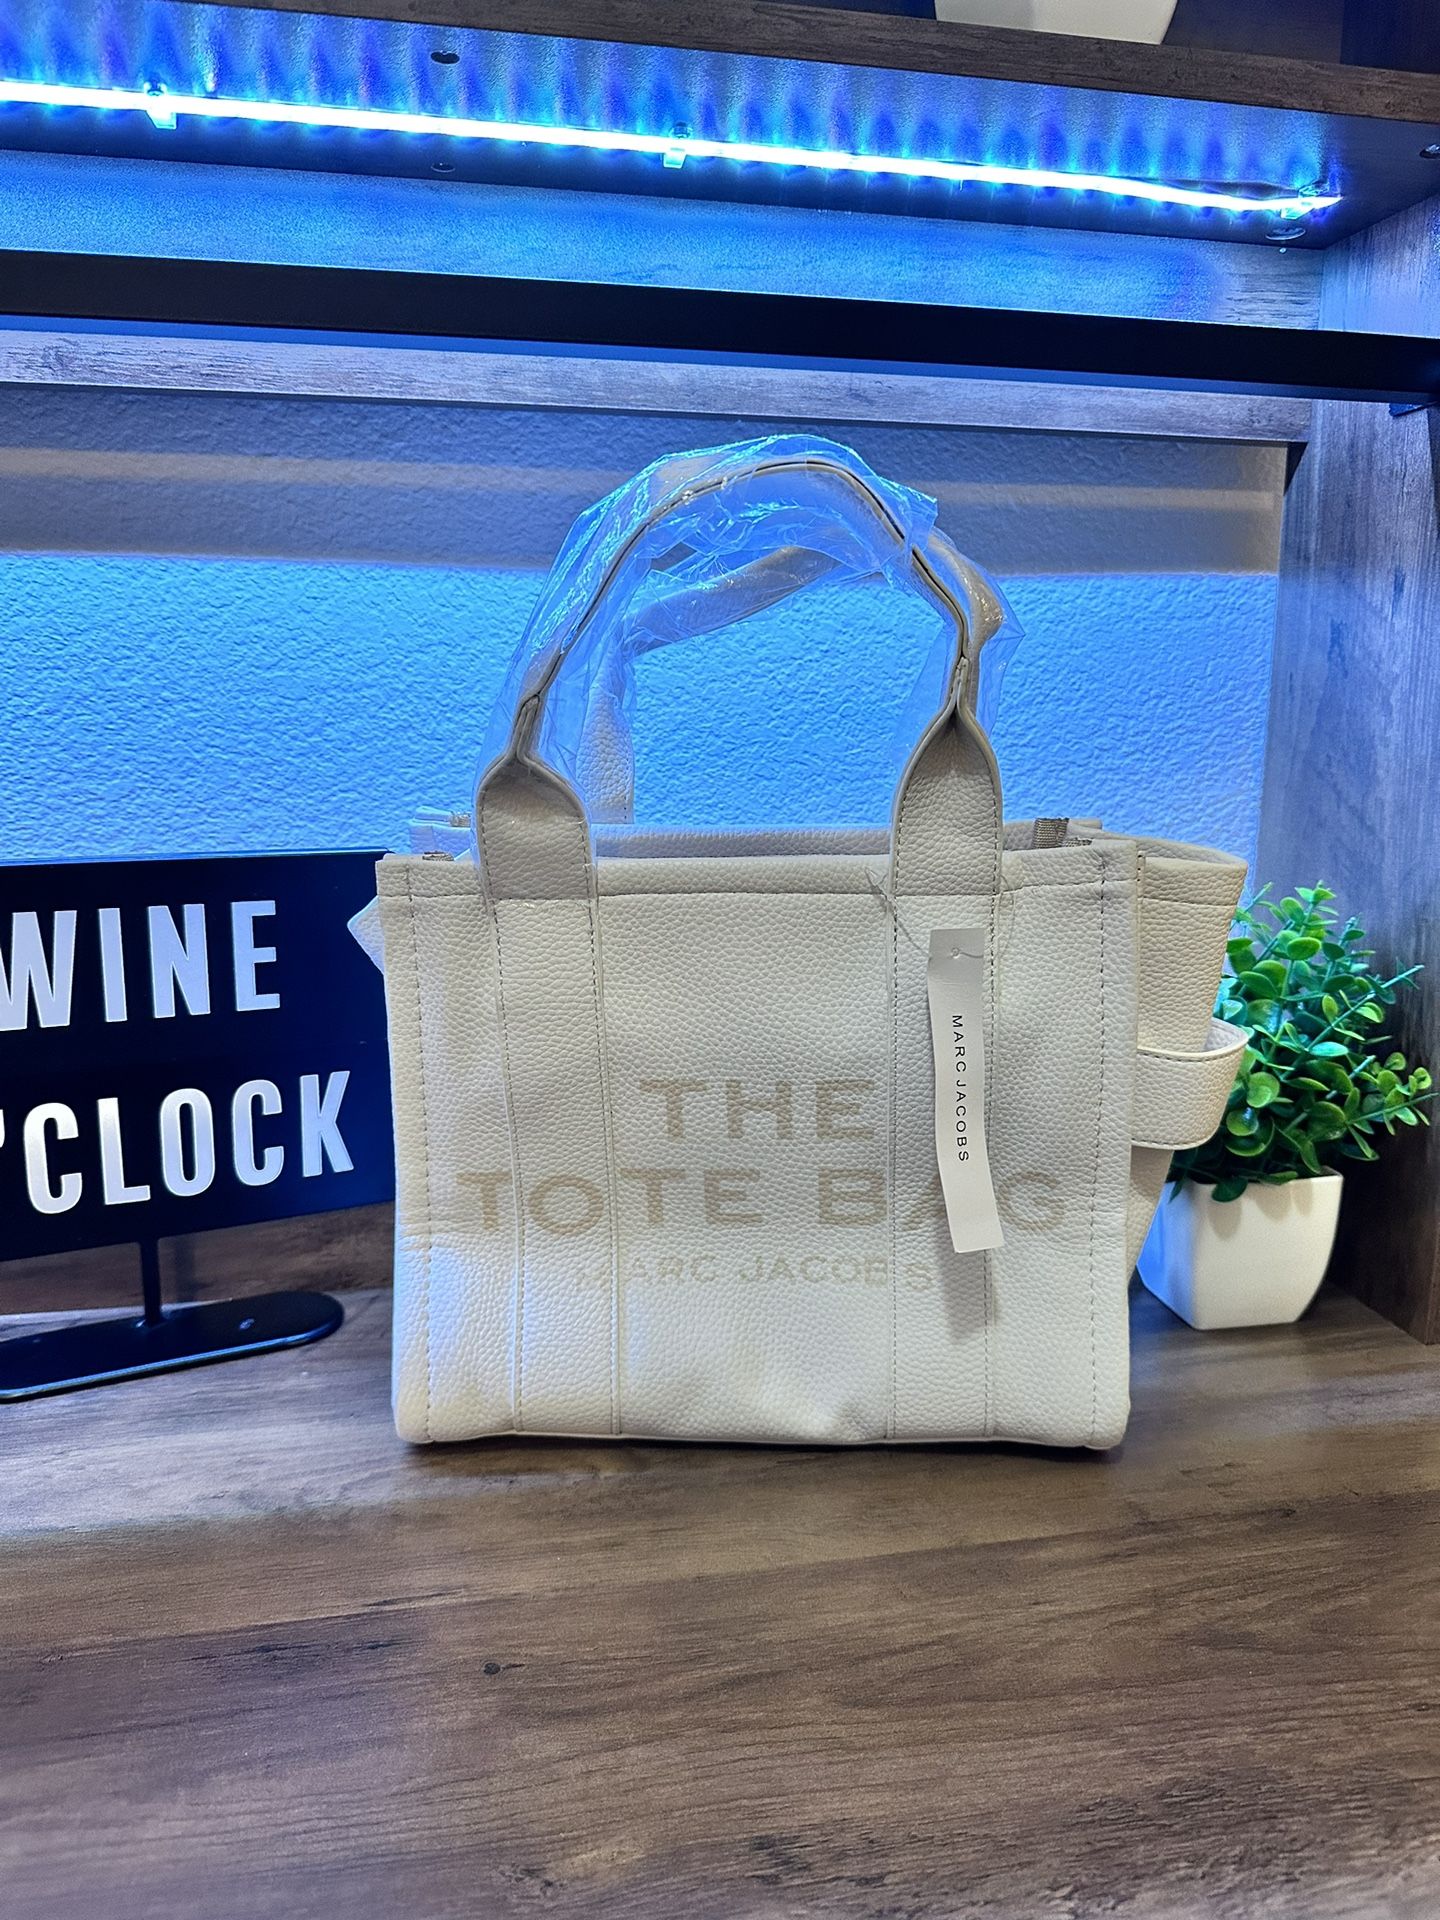 The Tote Bag 